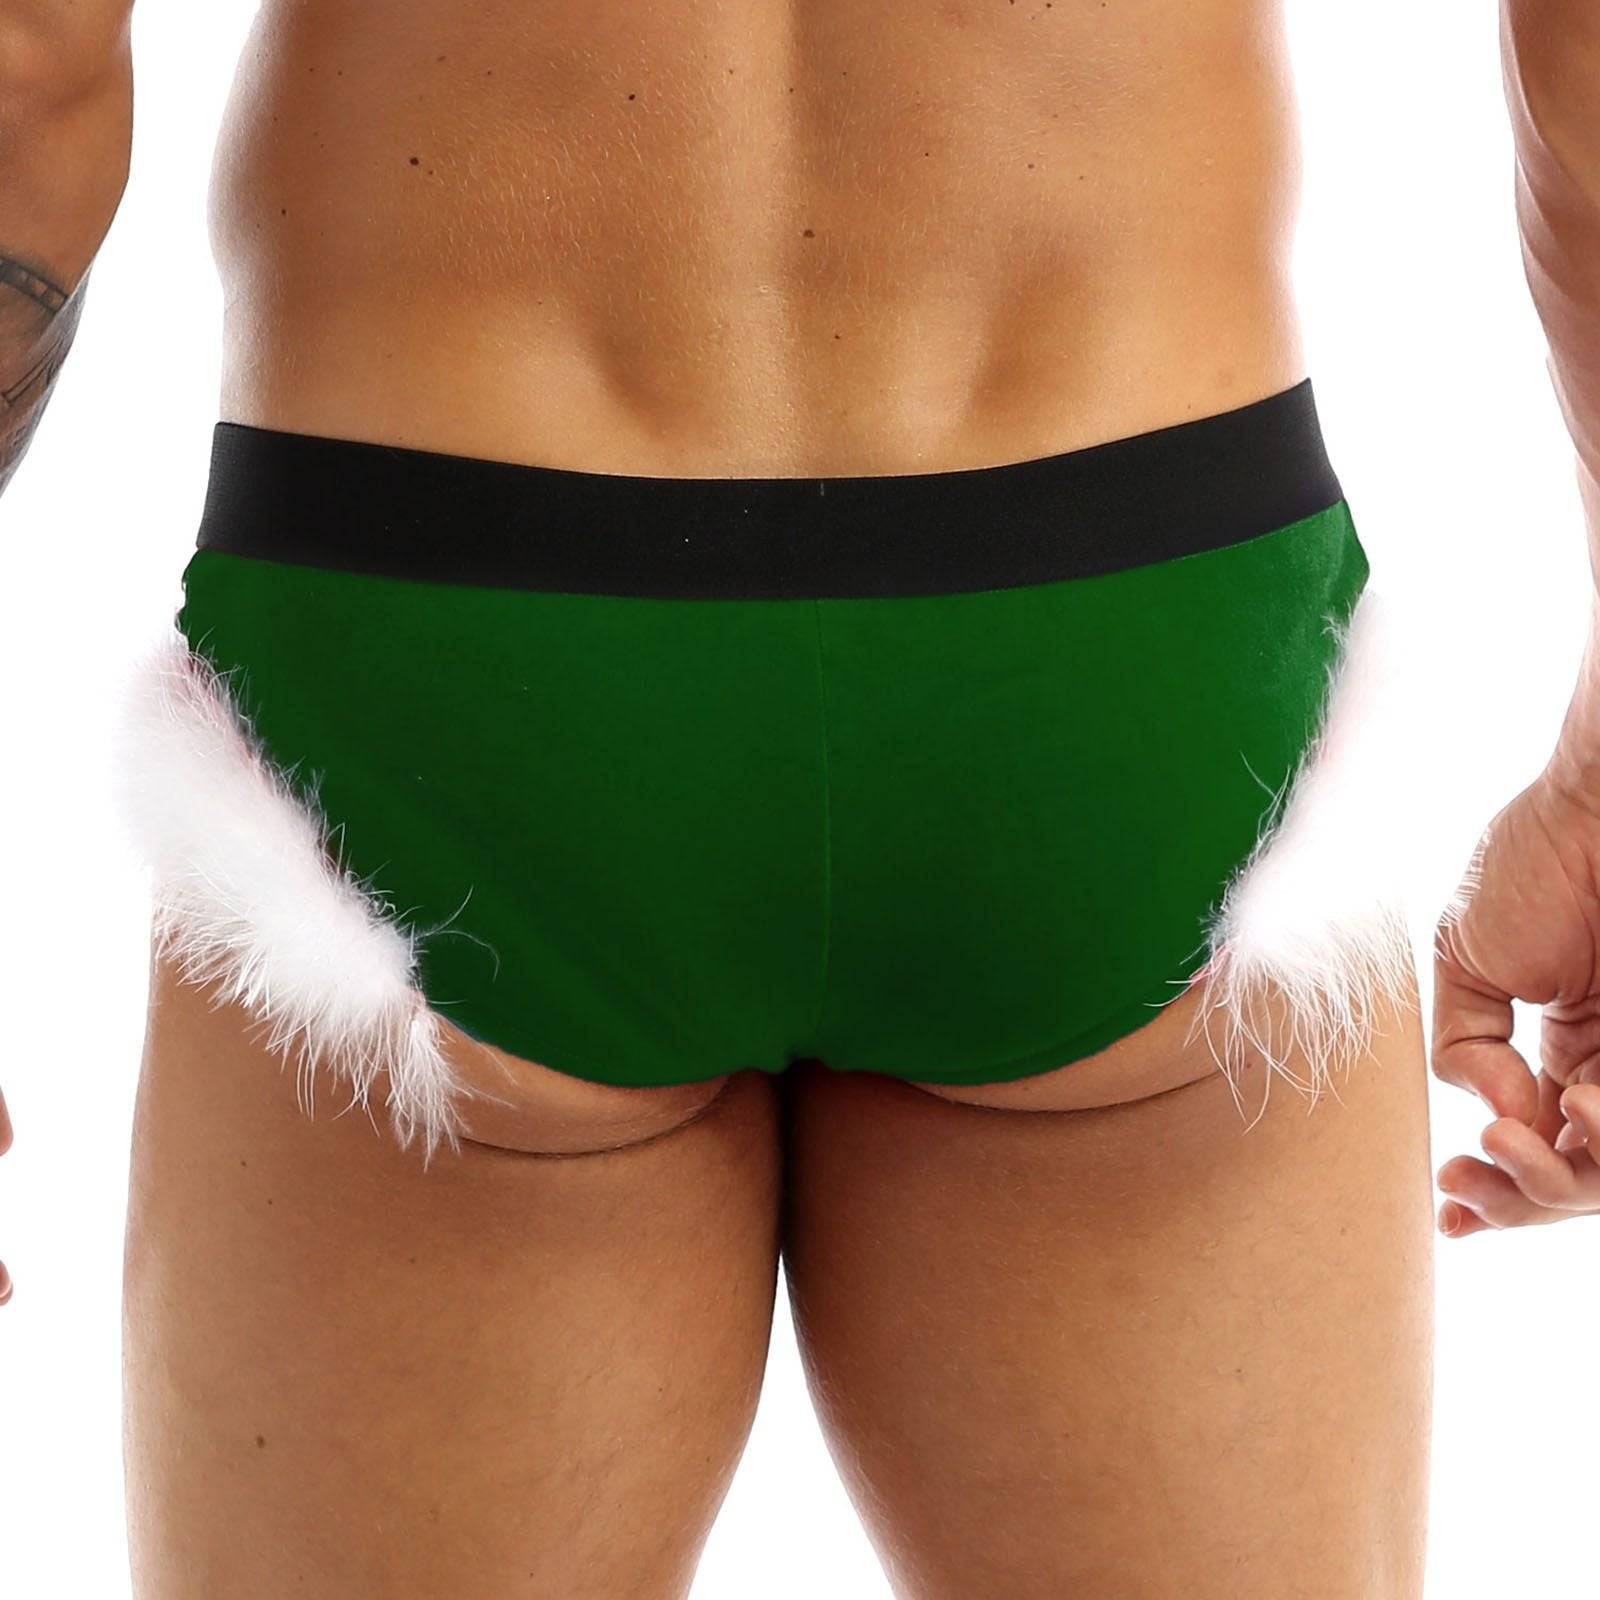 SALE - XMAS GIFT - Mens Sissy Christmas Velvet Santa Briefs with Feather Trim Green & White